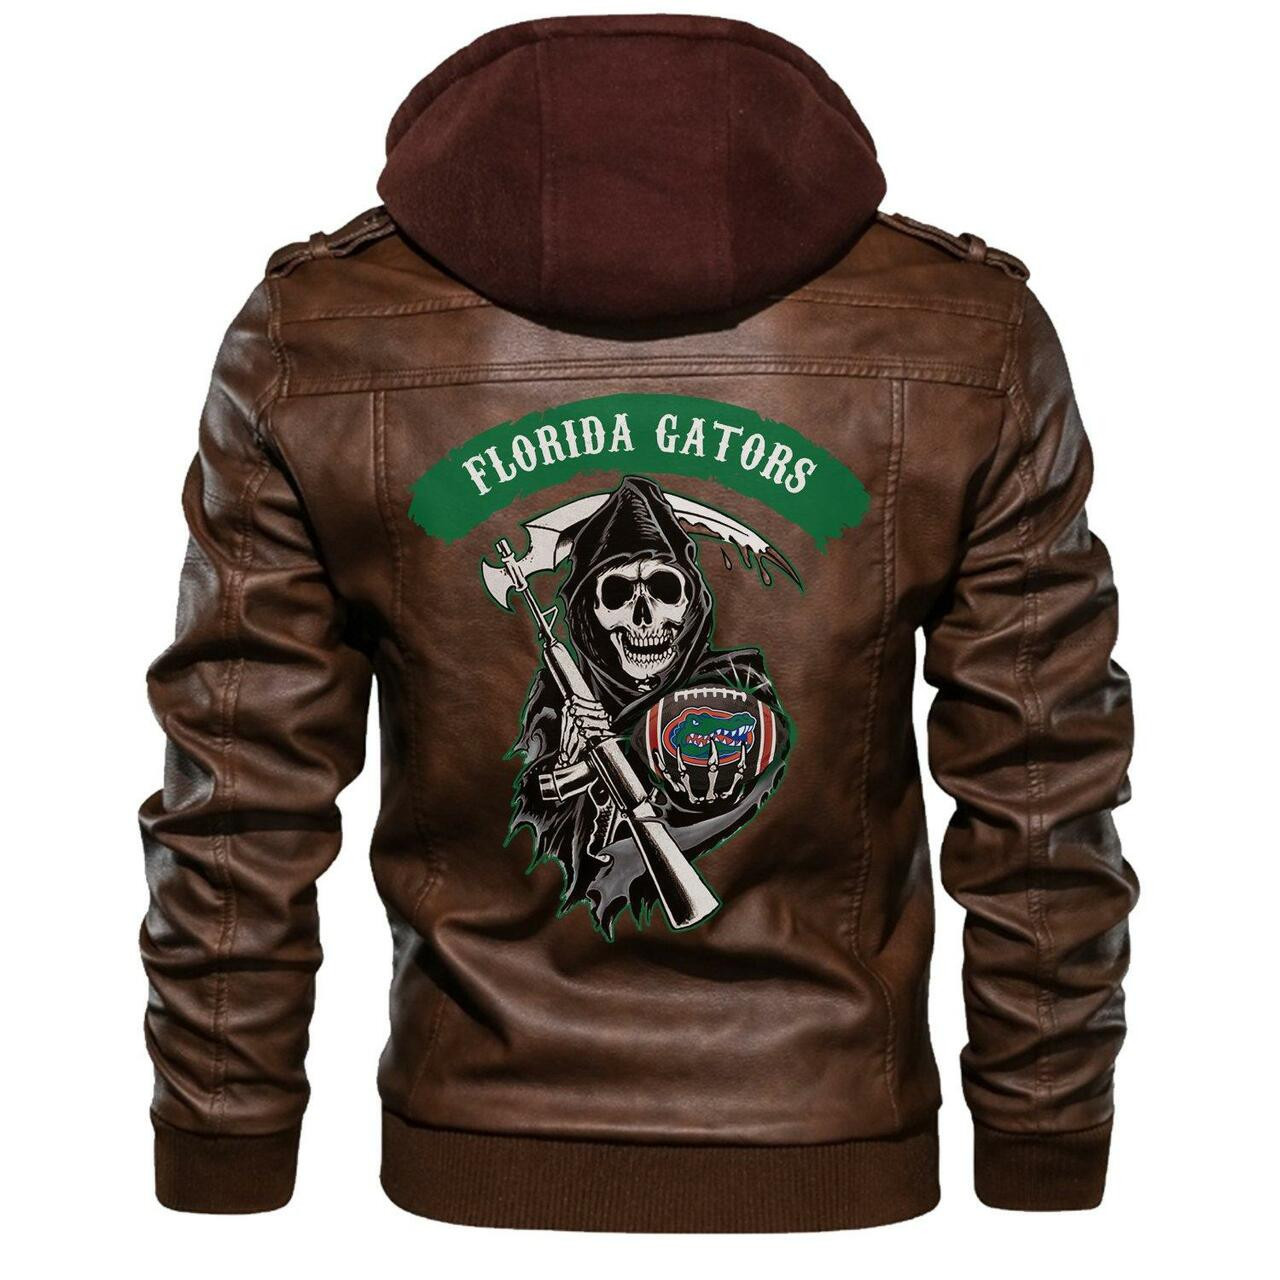 Top leather jacket Sells Best on Techcomshop 66